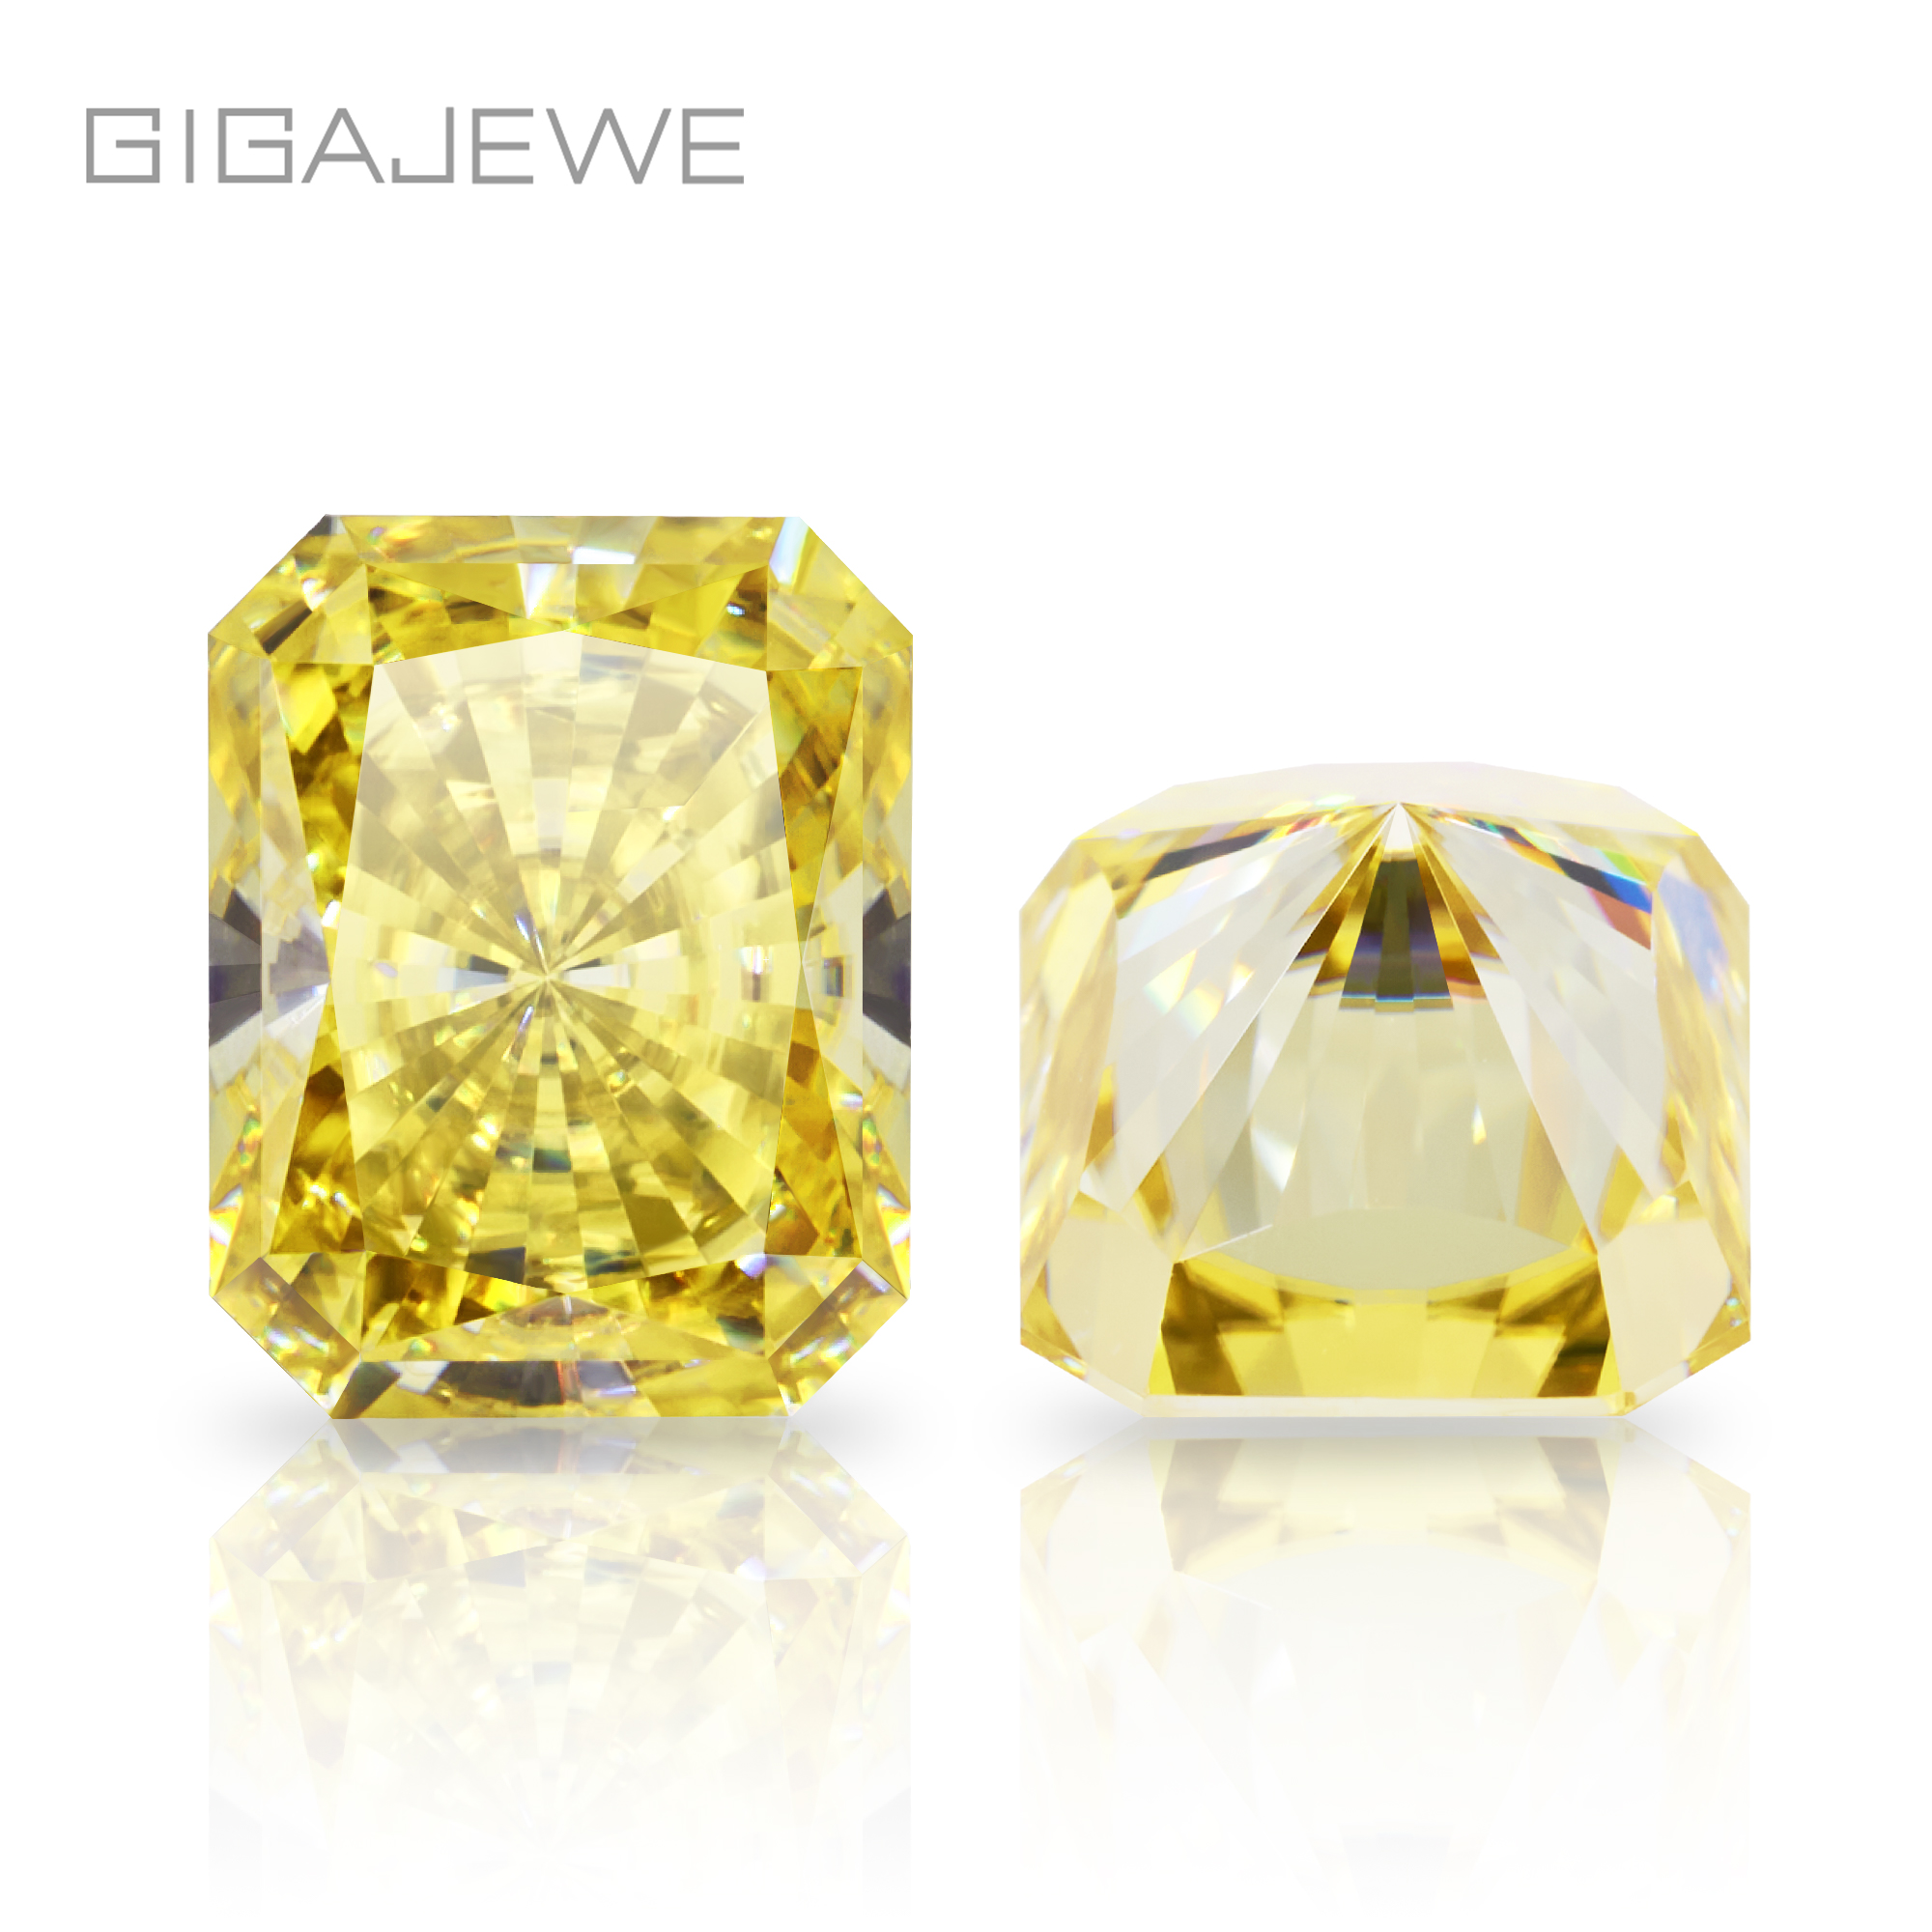 GIGAJEWE 定制雷地恩切割鲜艳黄色 VVS1 莫桑石裸钻测试通过宝石用于珠宝制作